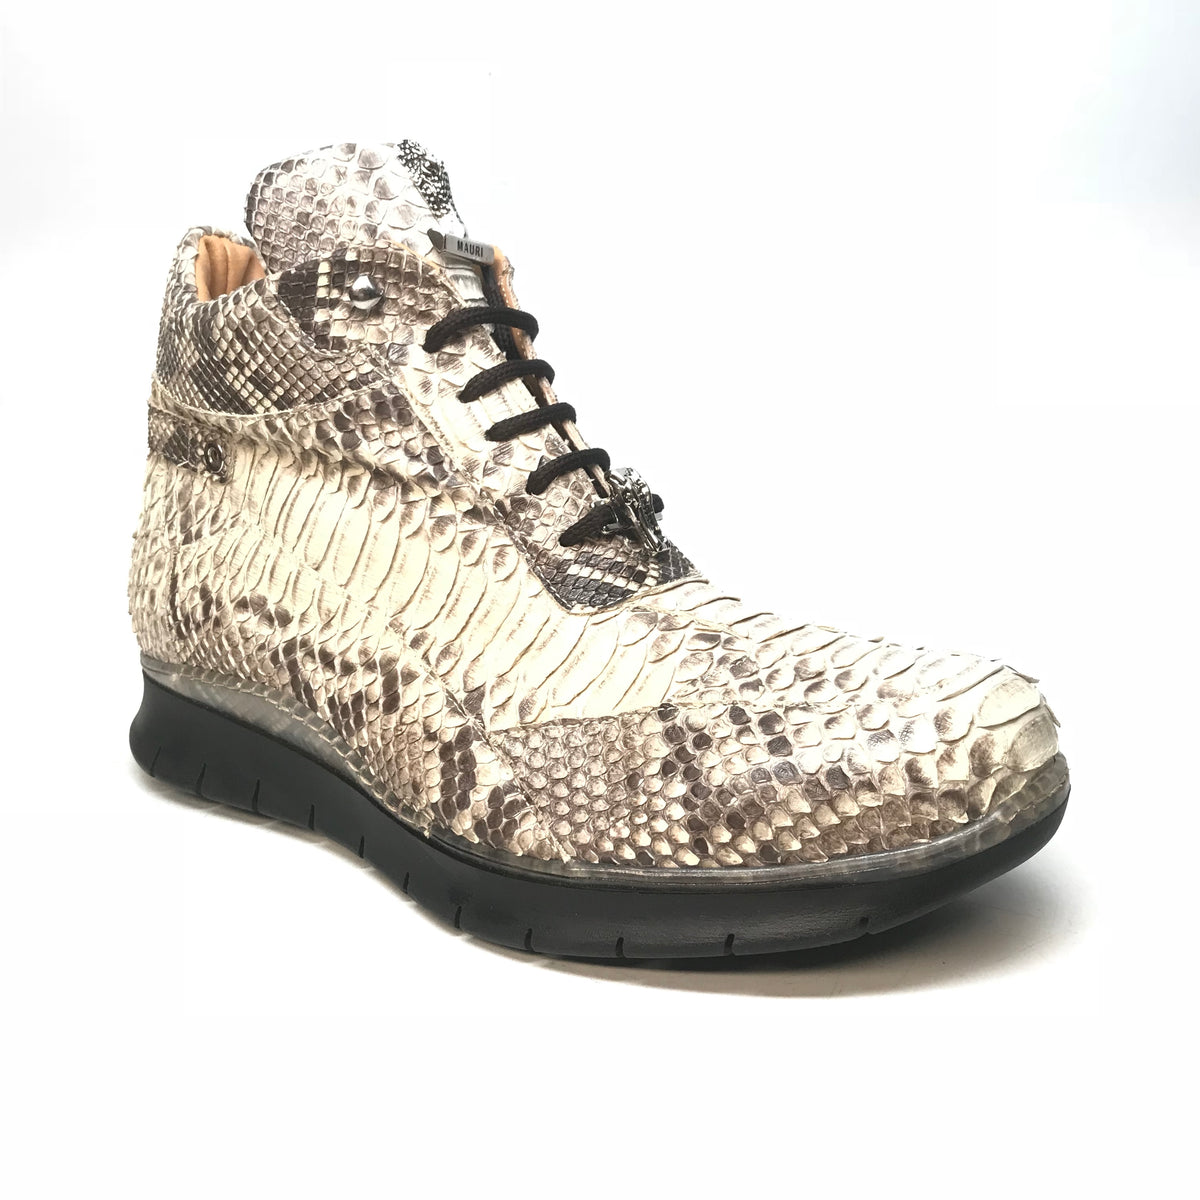 Mauri 8593 Natural Python Snakeskin Hightop Sneakers - Dudes Boutique